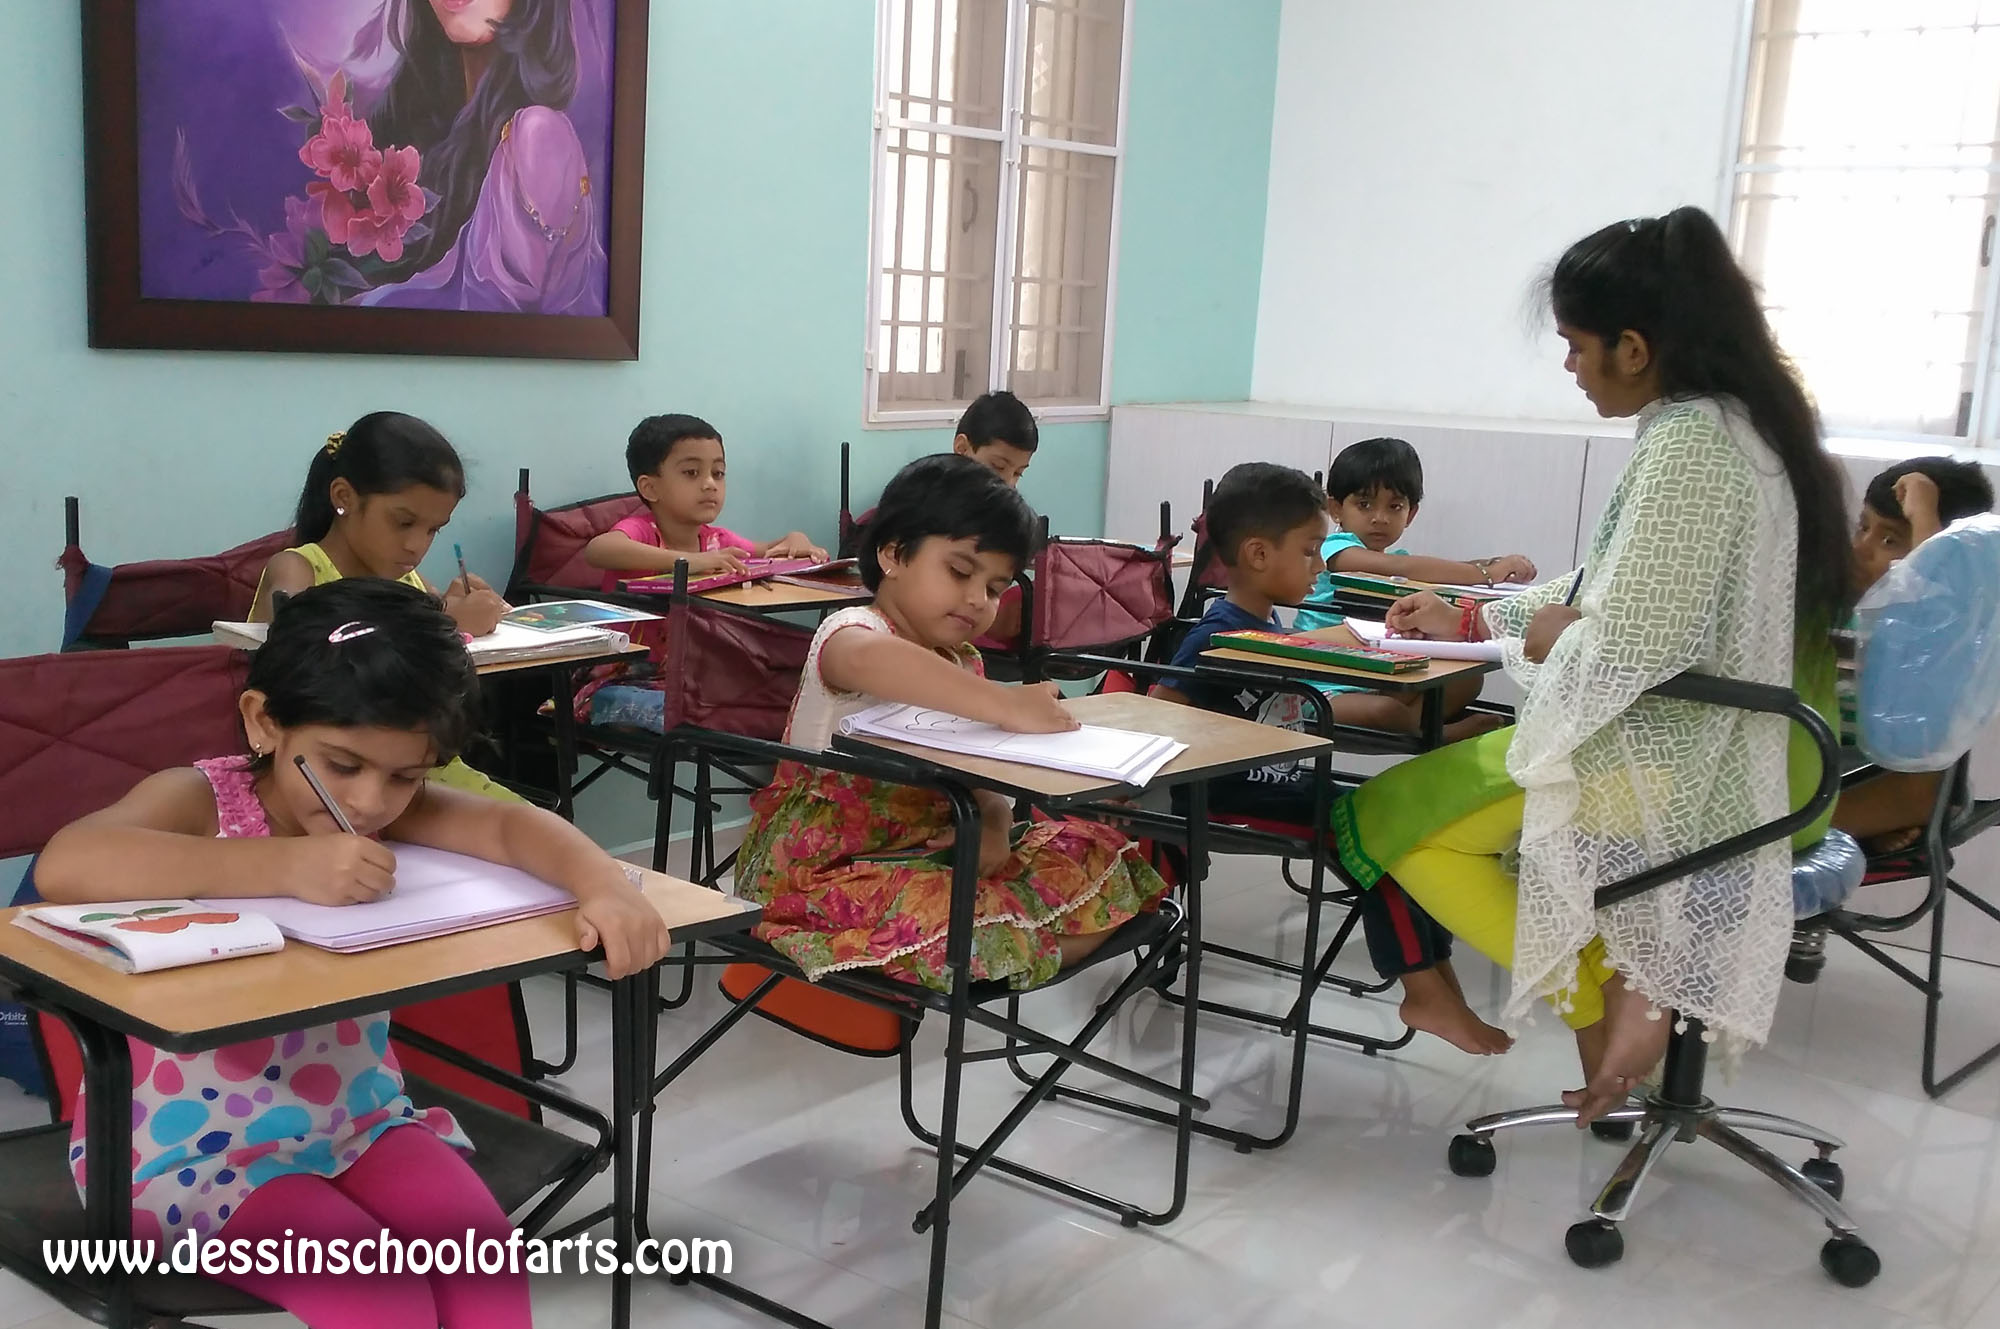 Dessin School of Arts, Dessin School of Arts, Drawing classes in Anna Nagar East L Block Class Room Photo 1 